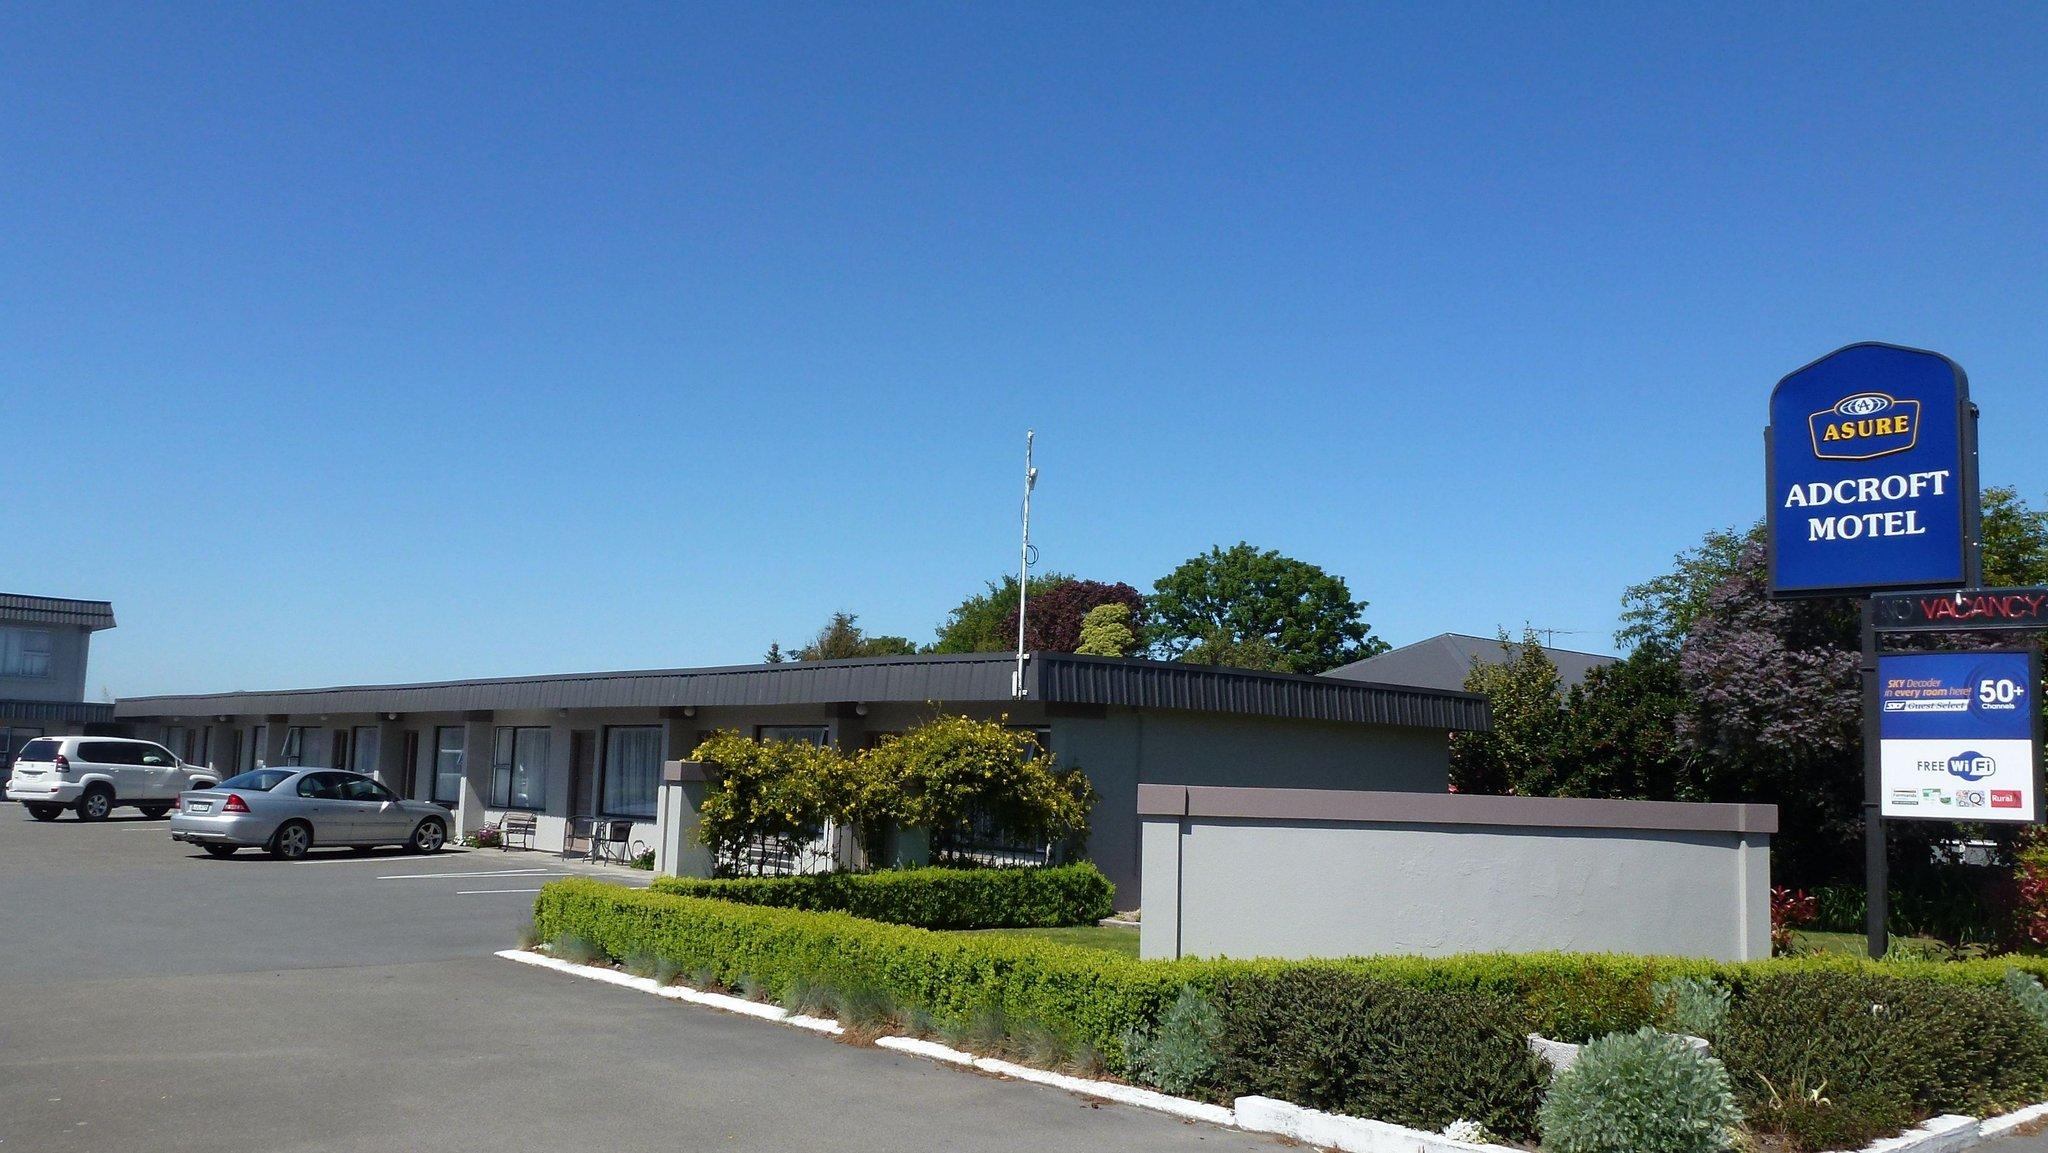 Asure Adcroft Motel in Ashburton, NZ